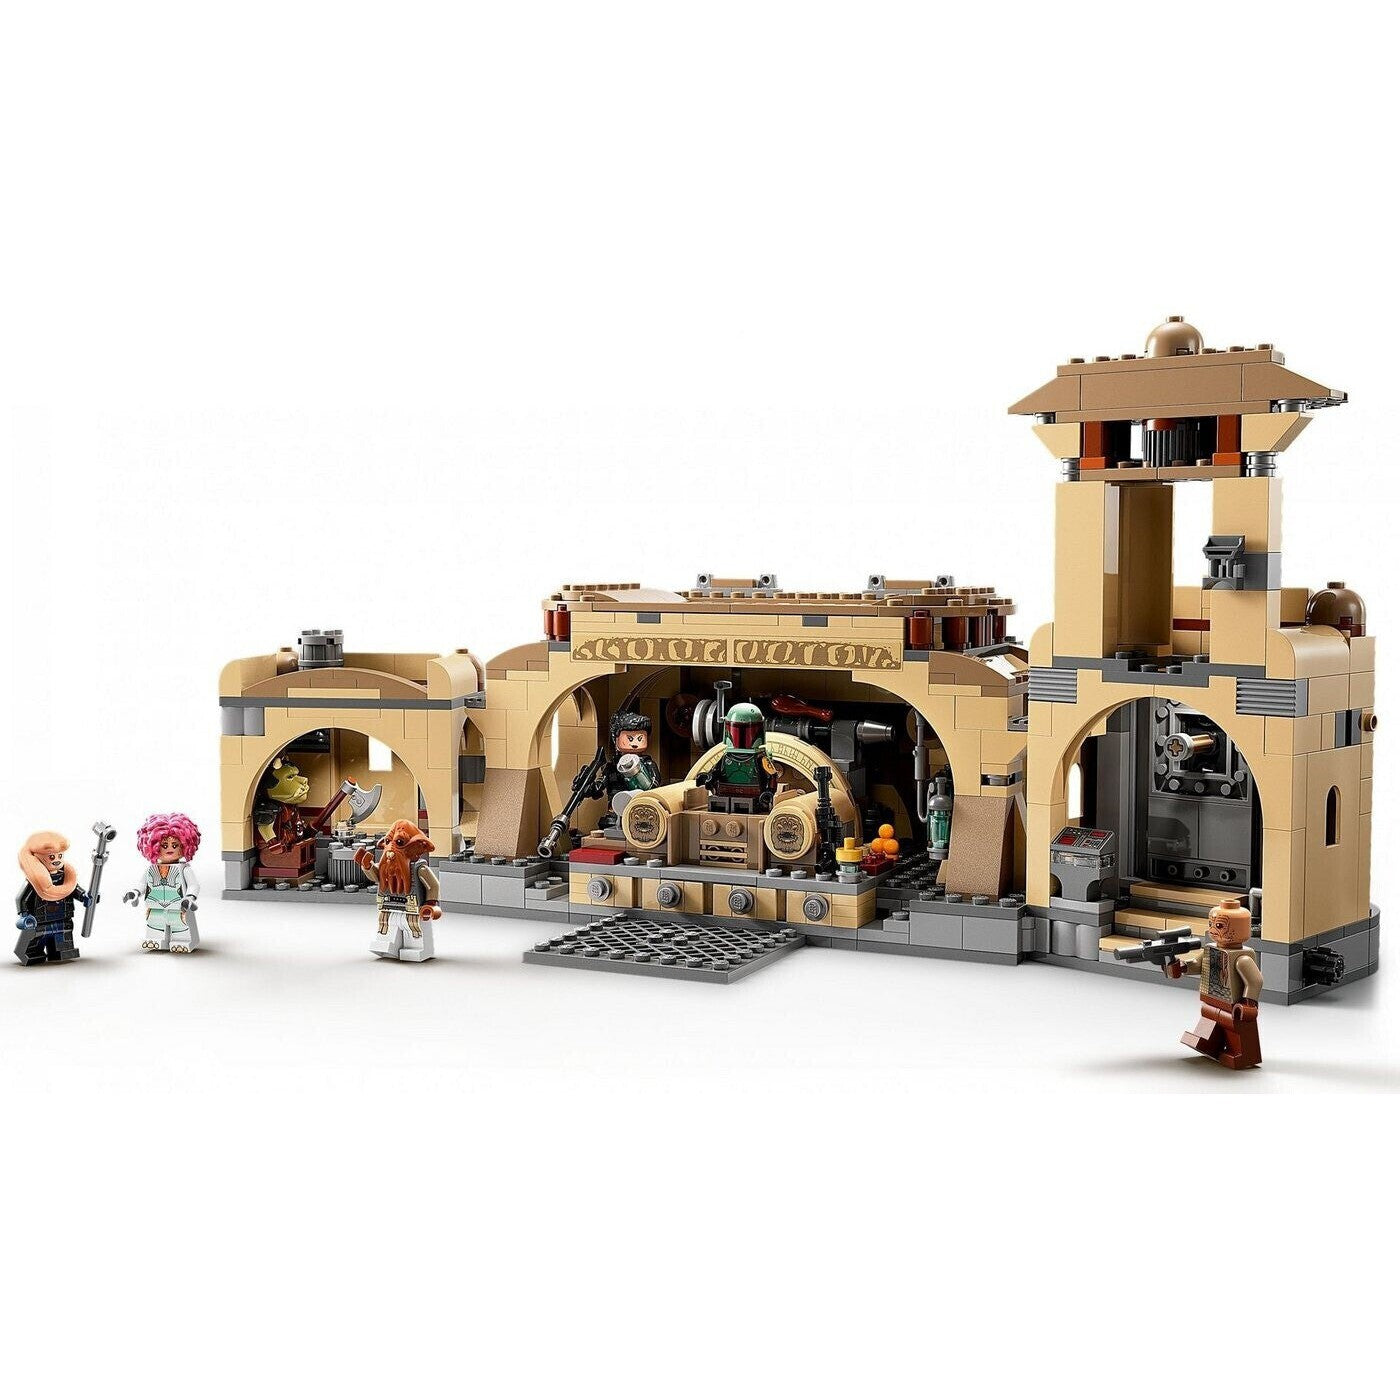 LEGO 75326 Star Wars Boba Fetts Thronsaal